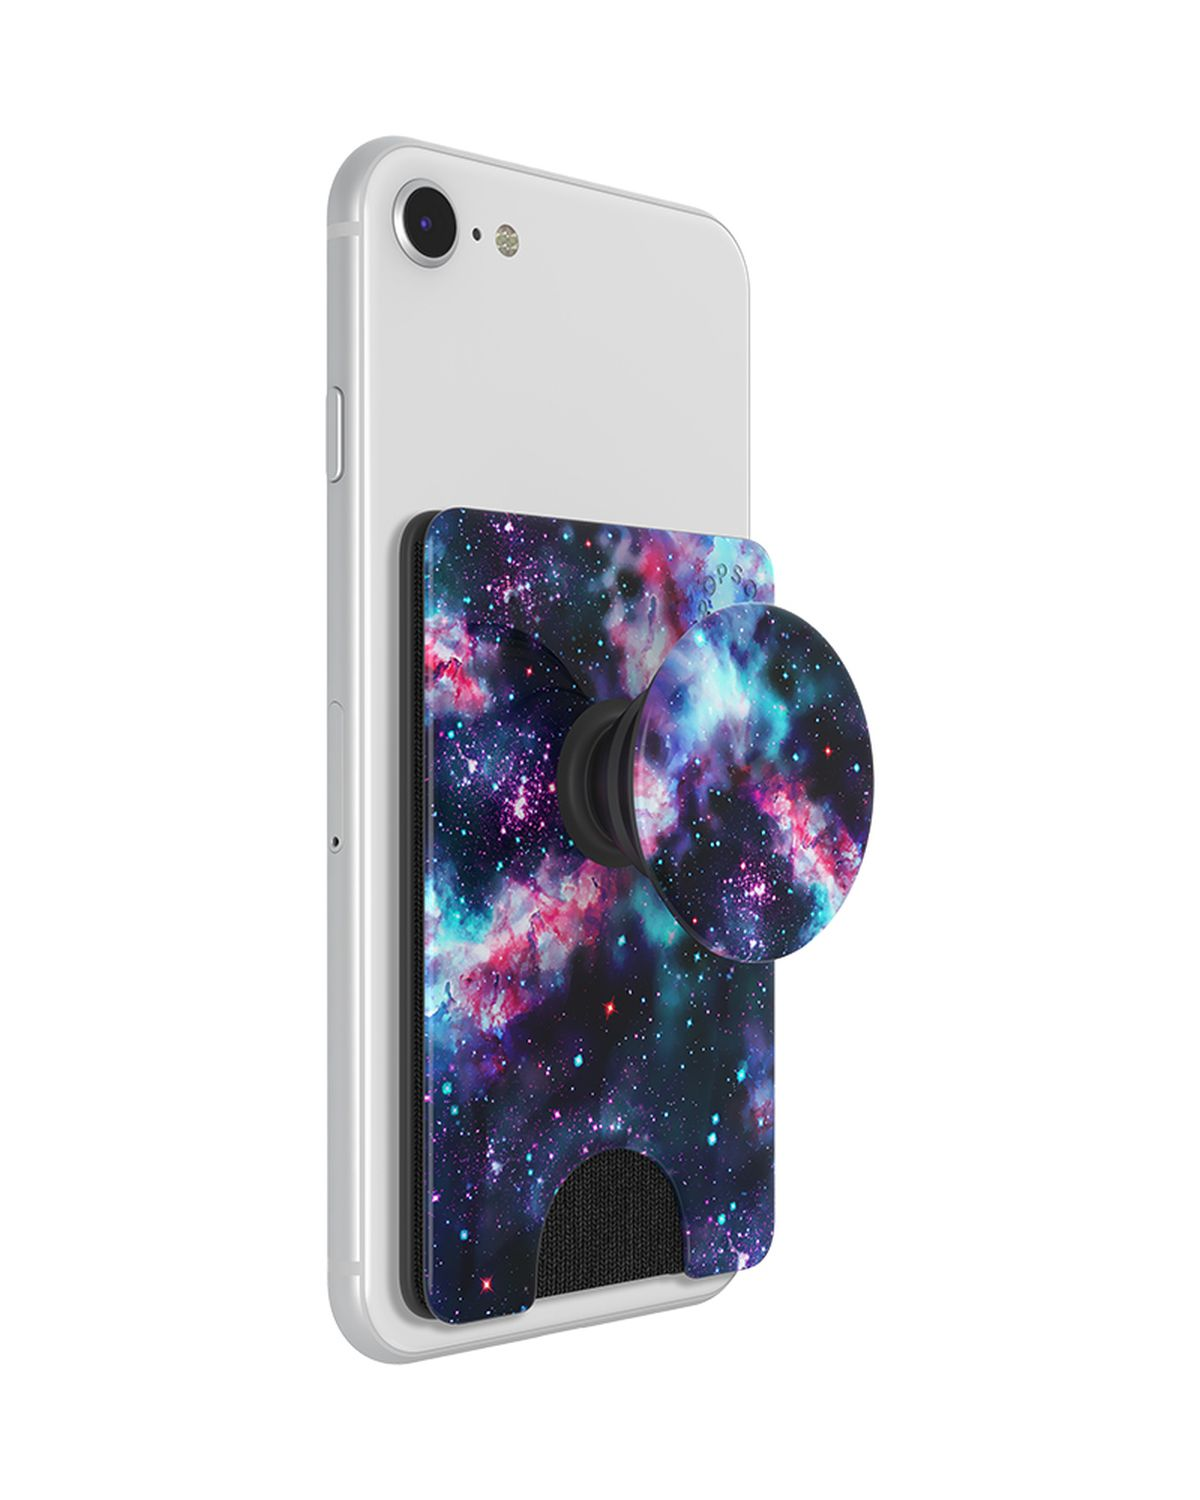 PopWallet + PopSockets Galactic Nebula